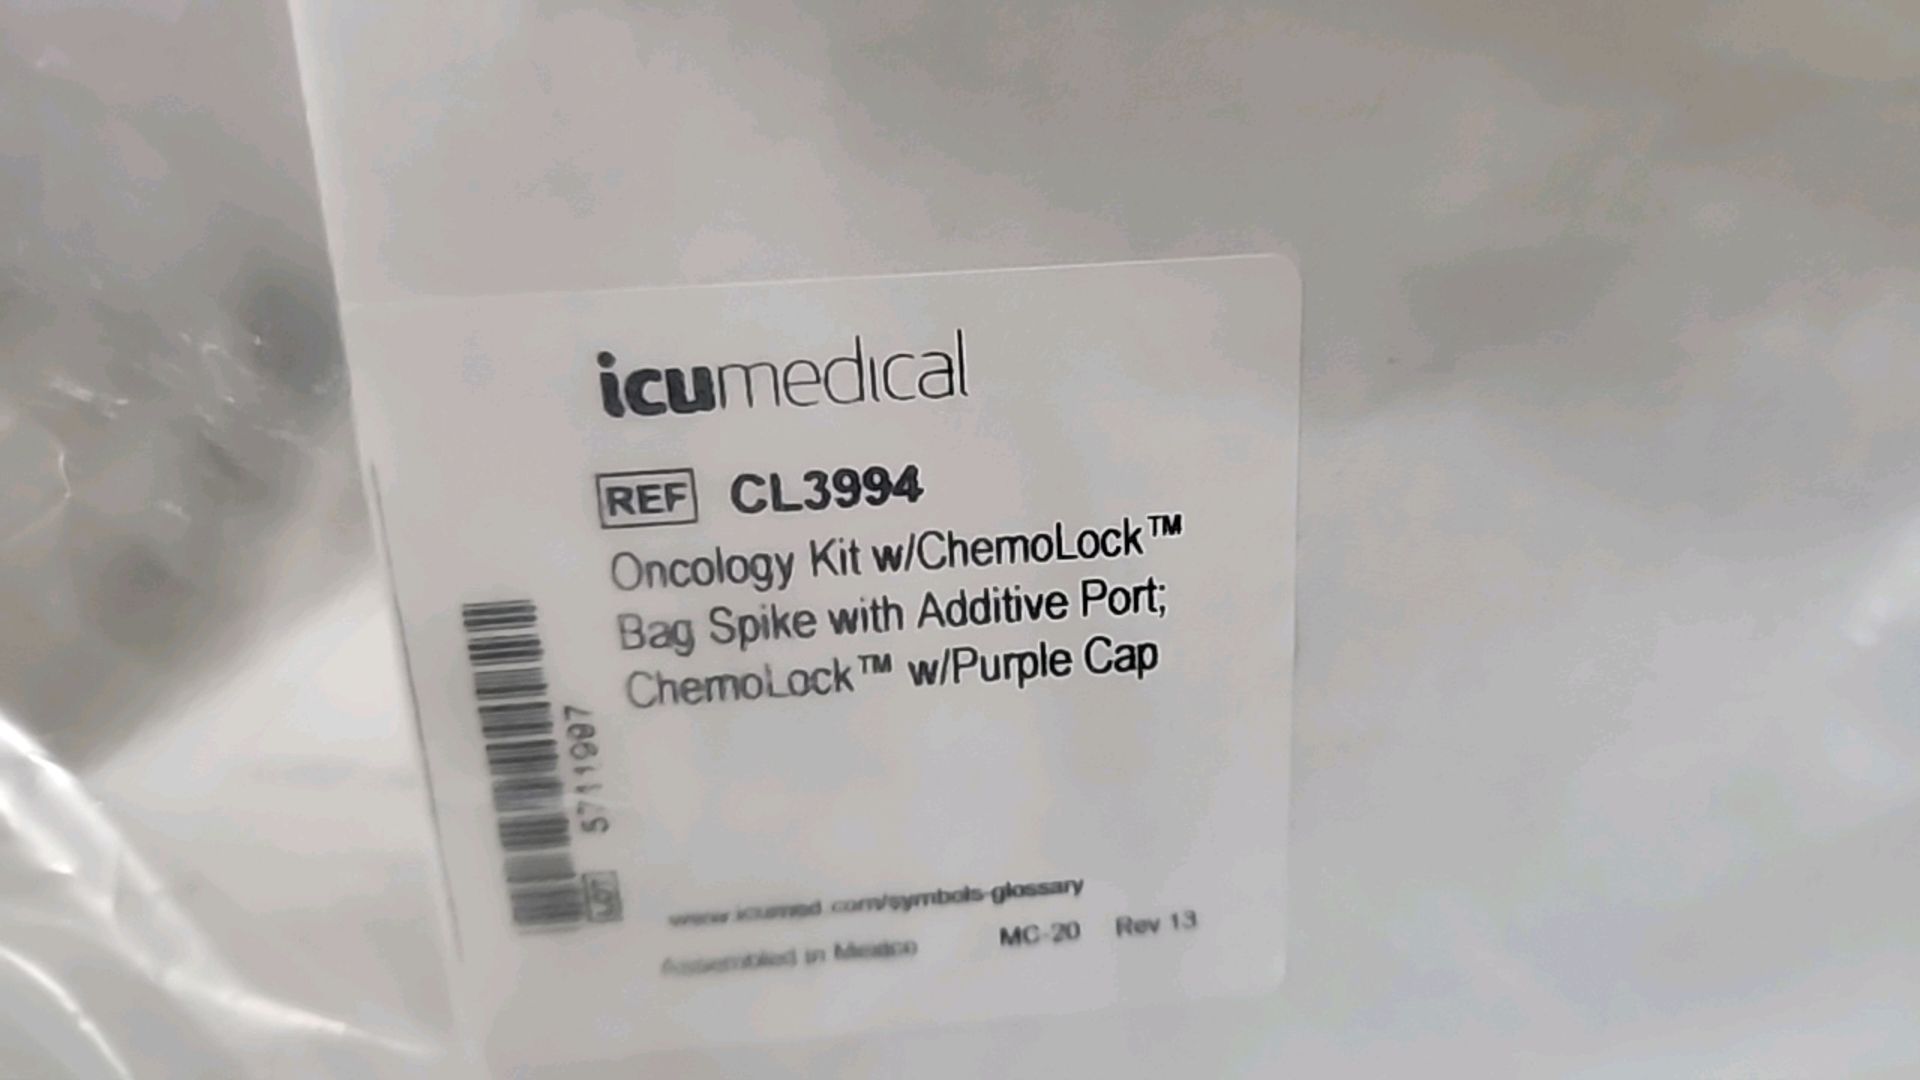 ICU MEDICAL REF CL3994 ONCOLOGY KIT W/ CHEMOLOCK BAG SPIKE W/ ADDITIVE PORT CHEMOLOCK W/ PURPLE - Image 2 of 3